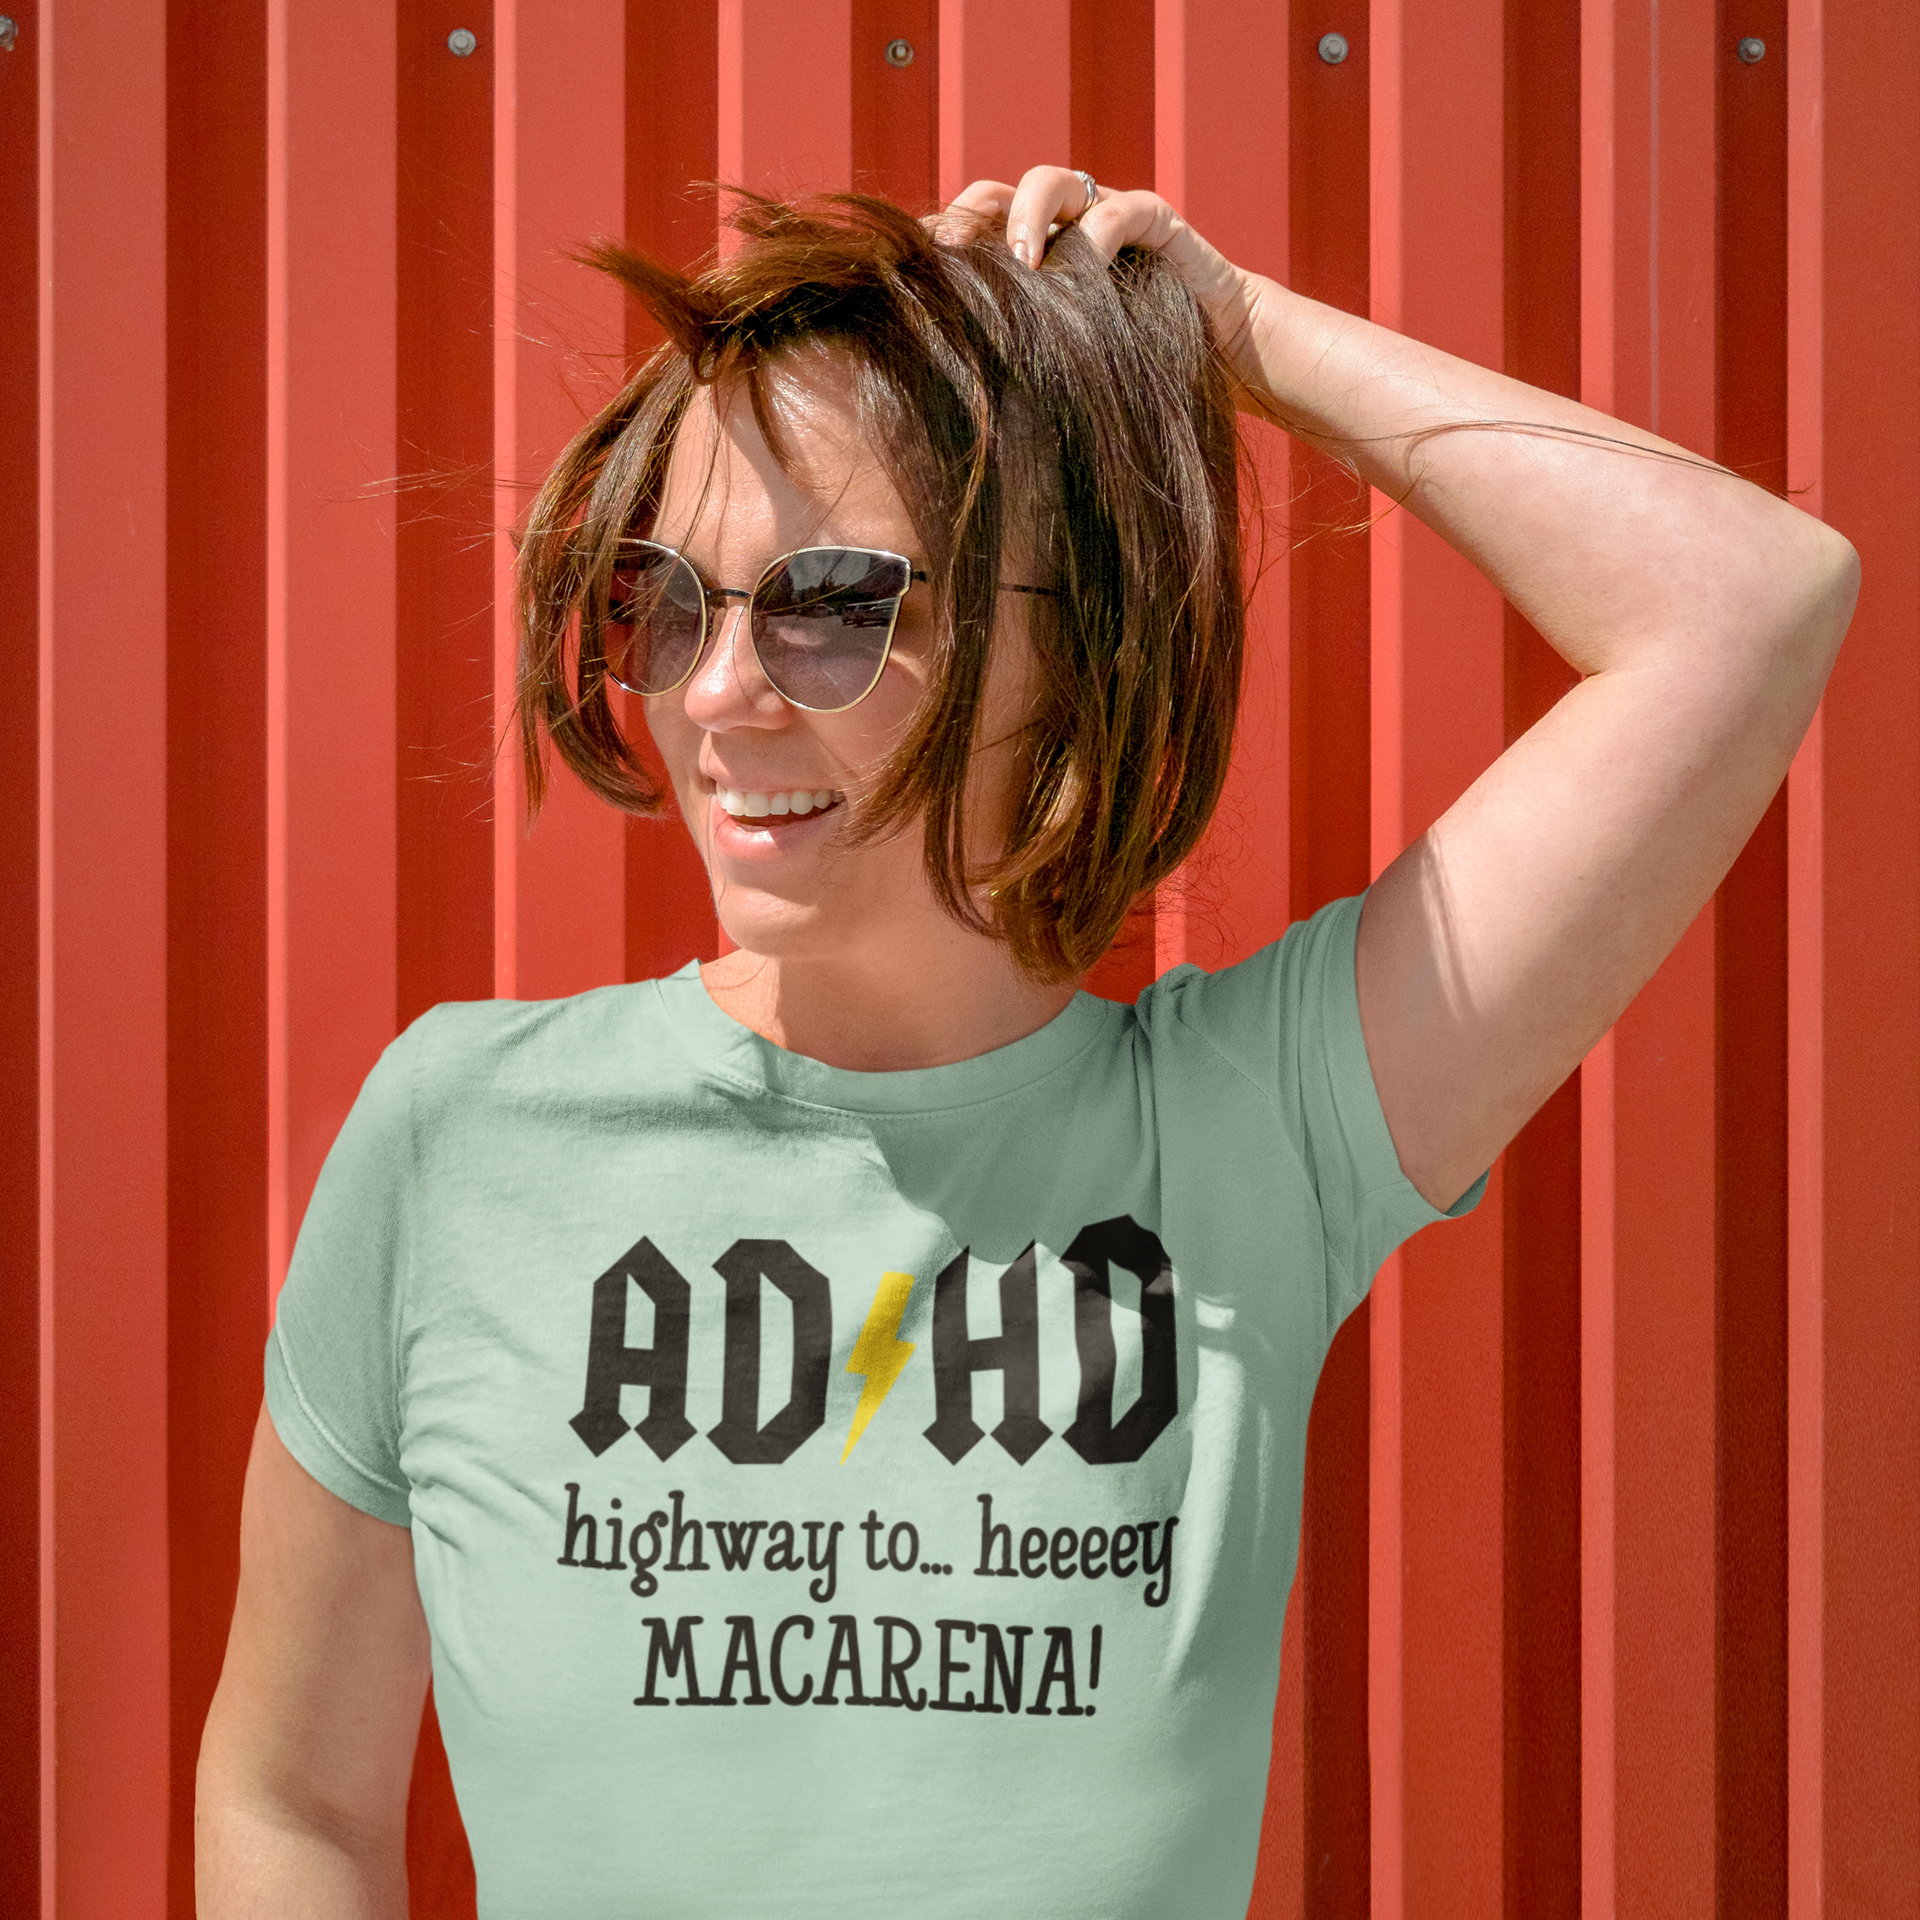 ADHD - Highway to… heeeey MACARENA!' volwassene shirt